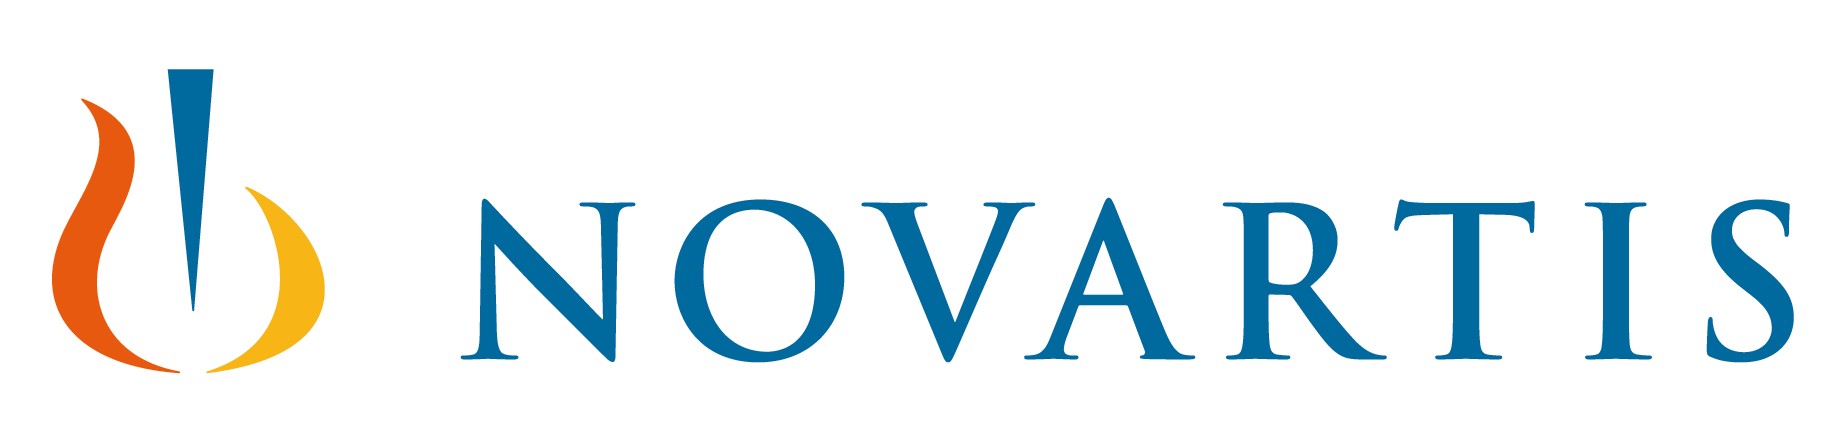 Novartis executes Sandoz Spin-off, completing strategic transformation into  a leading, focused innovative medicines company | AZBio